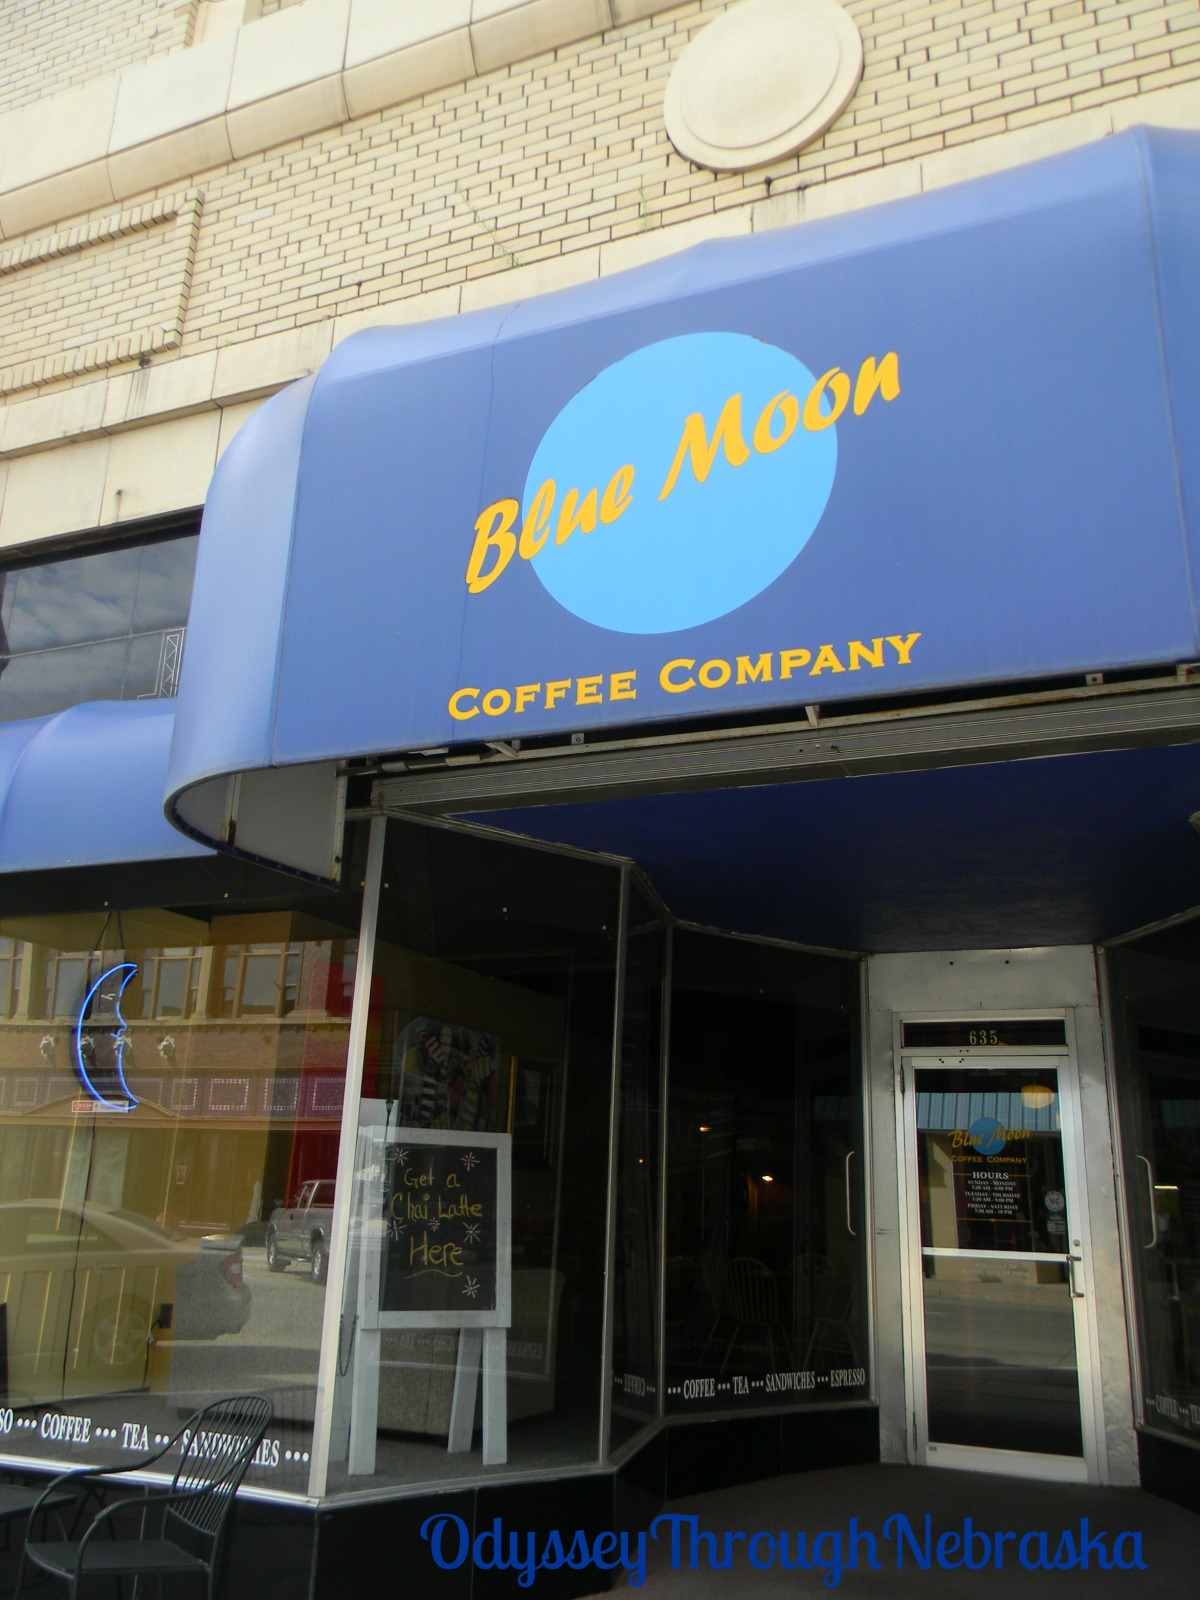 Blue Moon Coffee is a great place to get coffee in Hastings, Nebraska